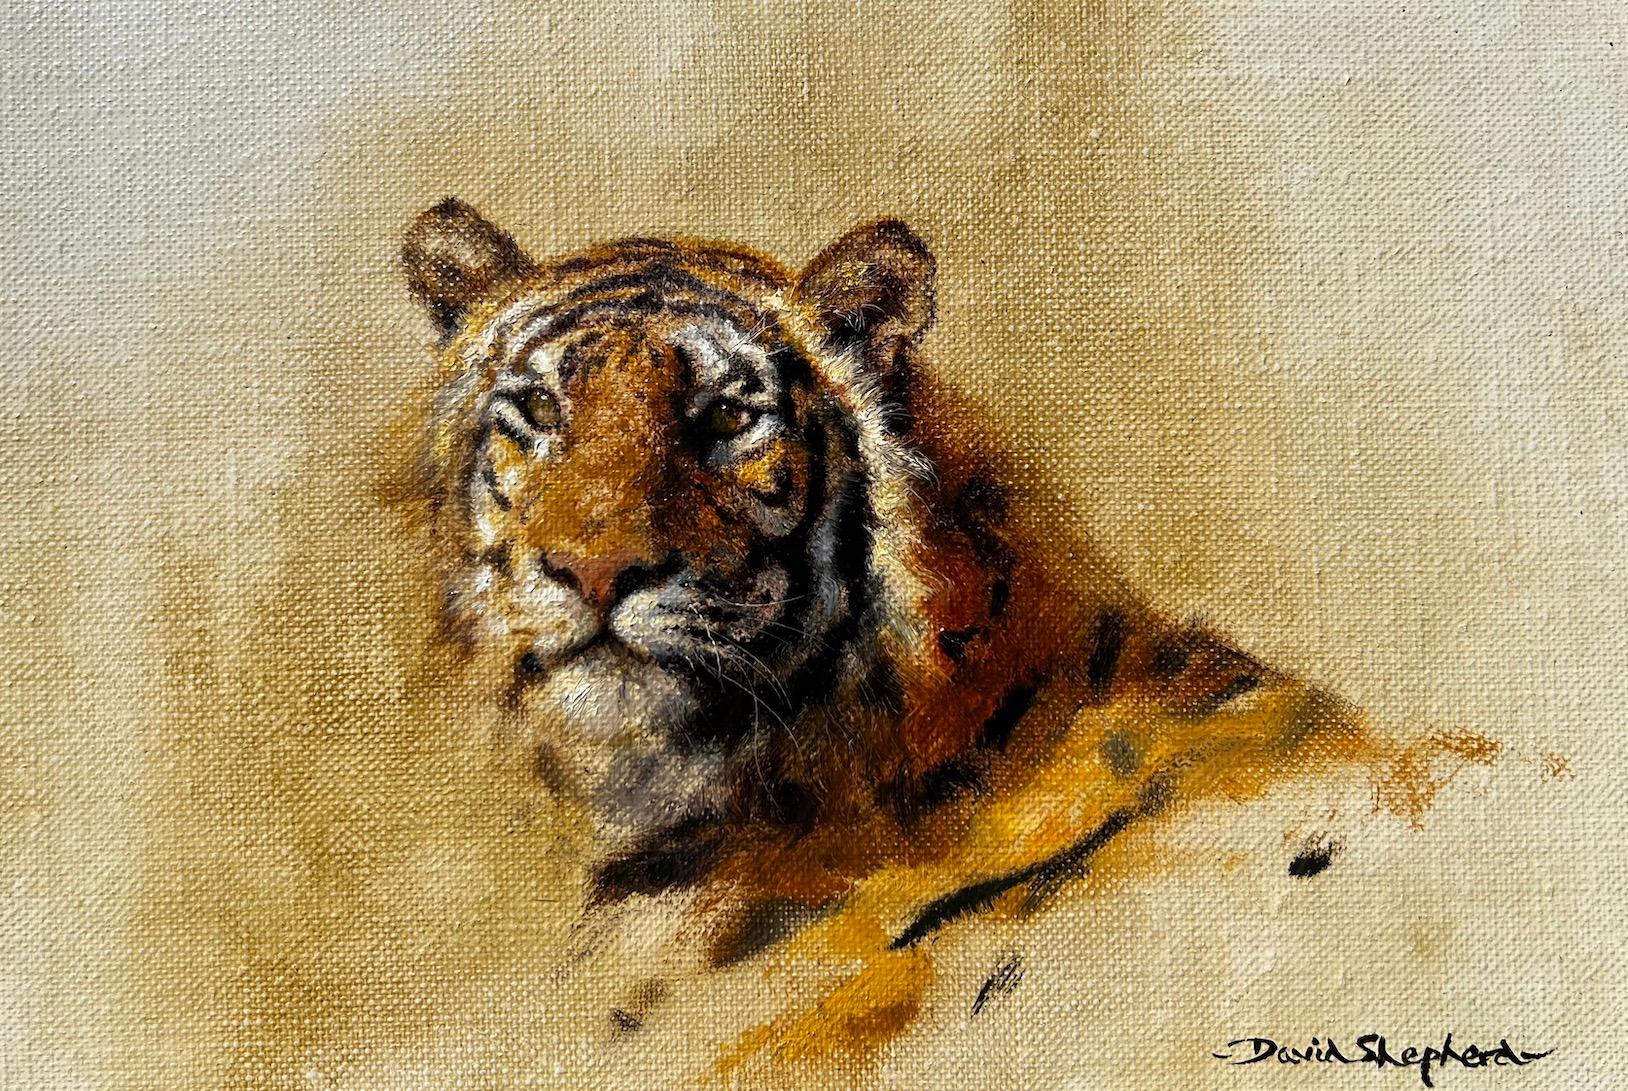 David Shepherd Animal Painting - The Eyes of the Tiger